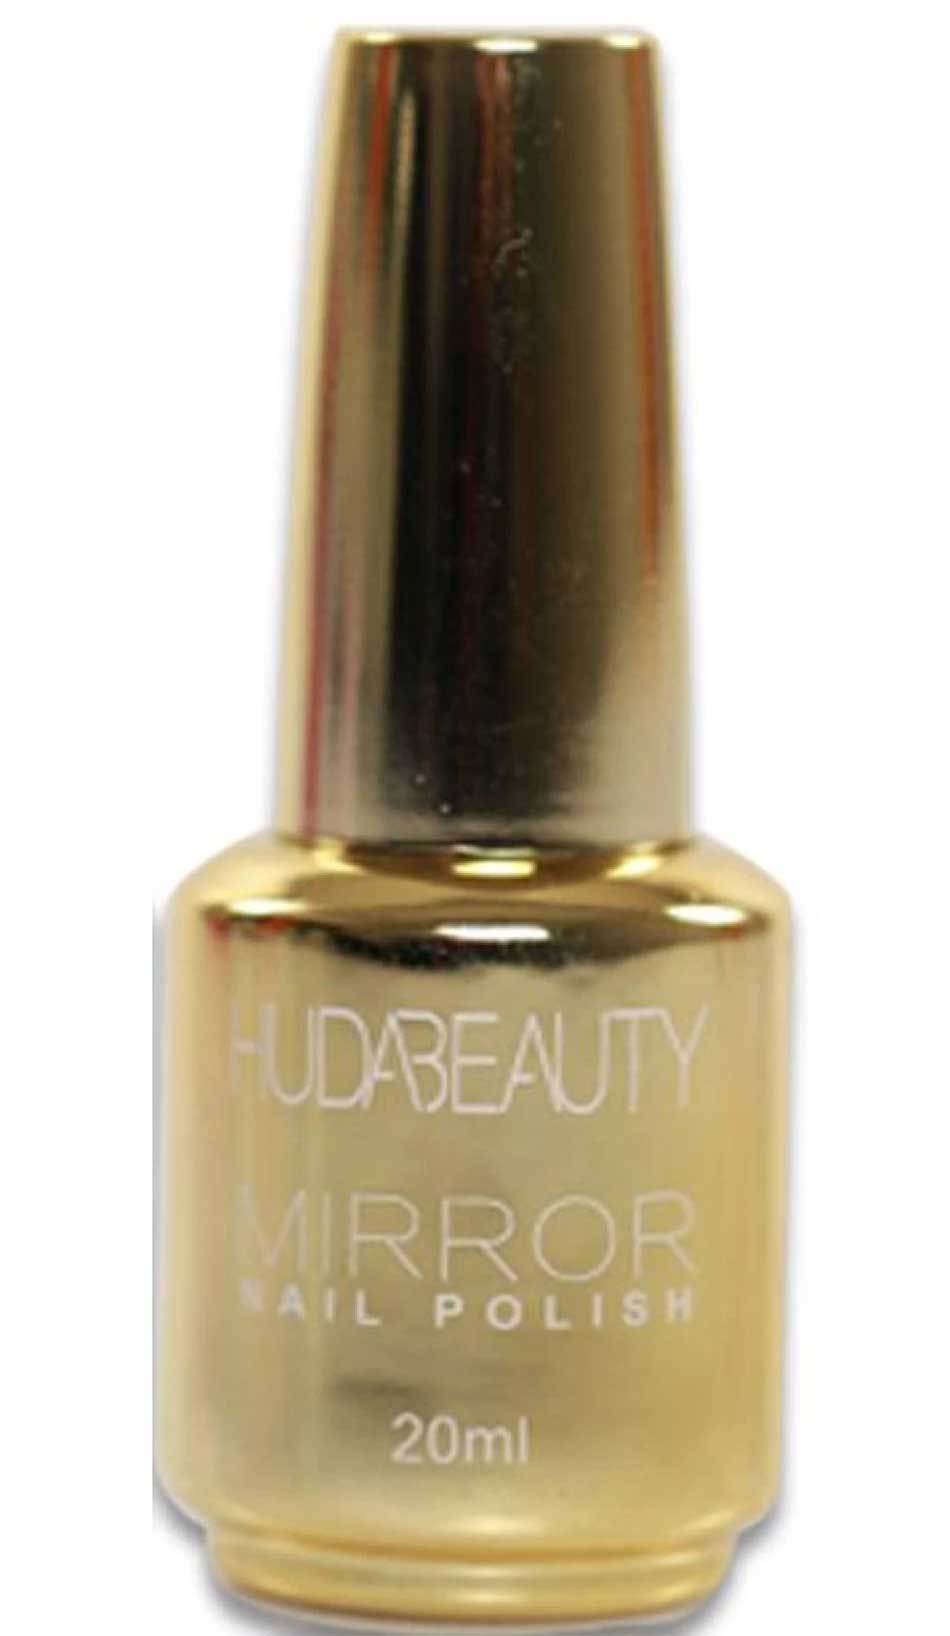 Huda Beauty Mirror Nail Polish Golden 20ml - Makeup